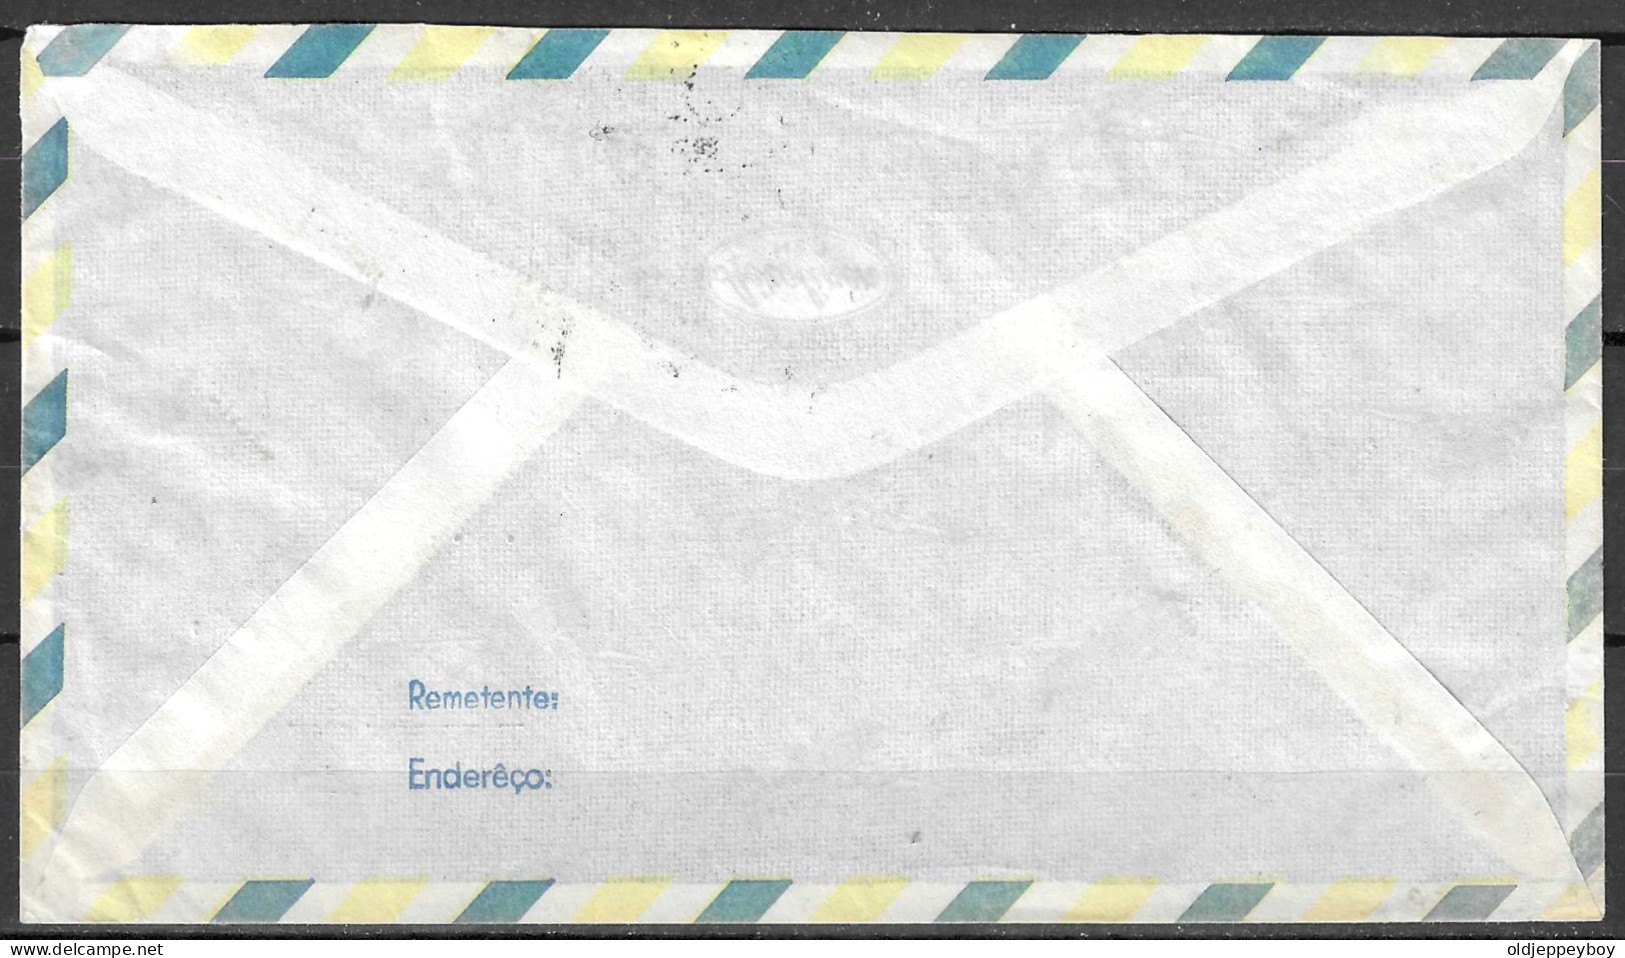 1962 Brazil Brasil Cover Envelope WIDMER & CIA BAHIA VIA AEREA  AIRMAIL TO ZURICH ZUERICH SUISSA SUISSE Switzerland   - Covers & Documents